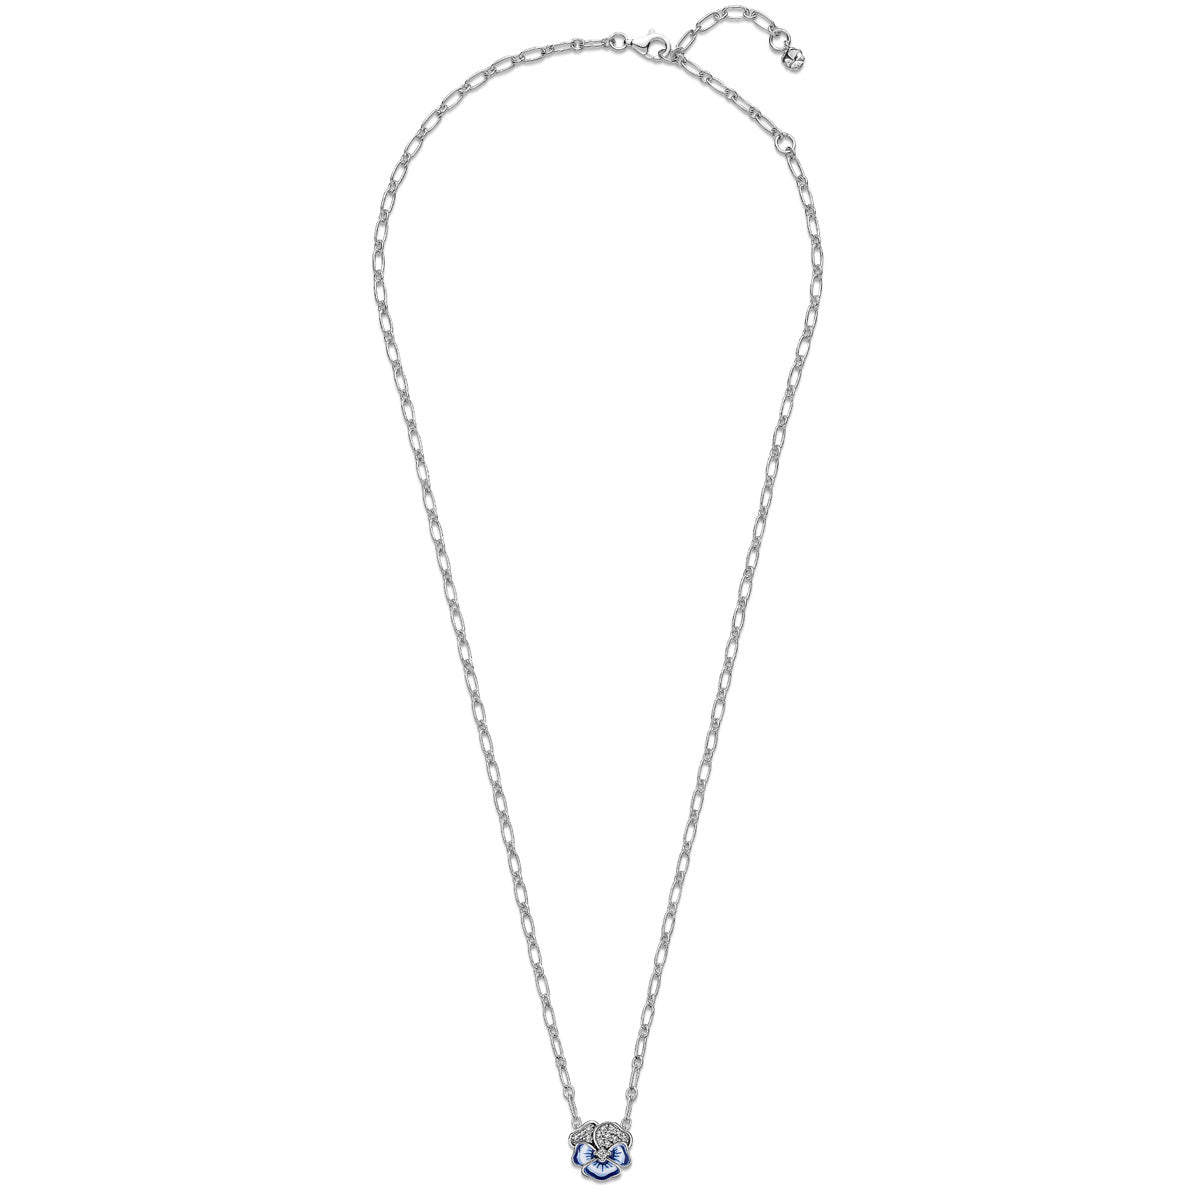 Pandora Blue Pansy Flower Pendant Necklace